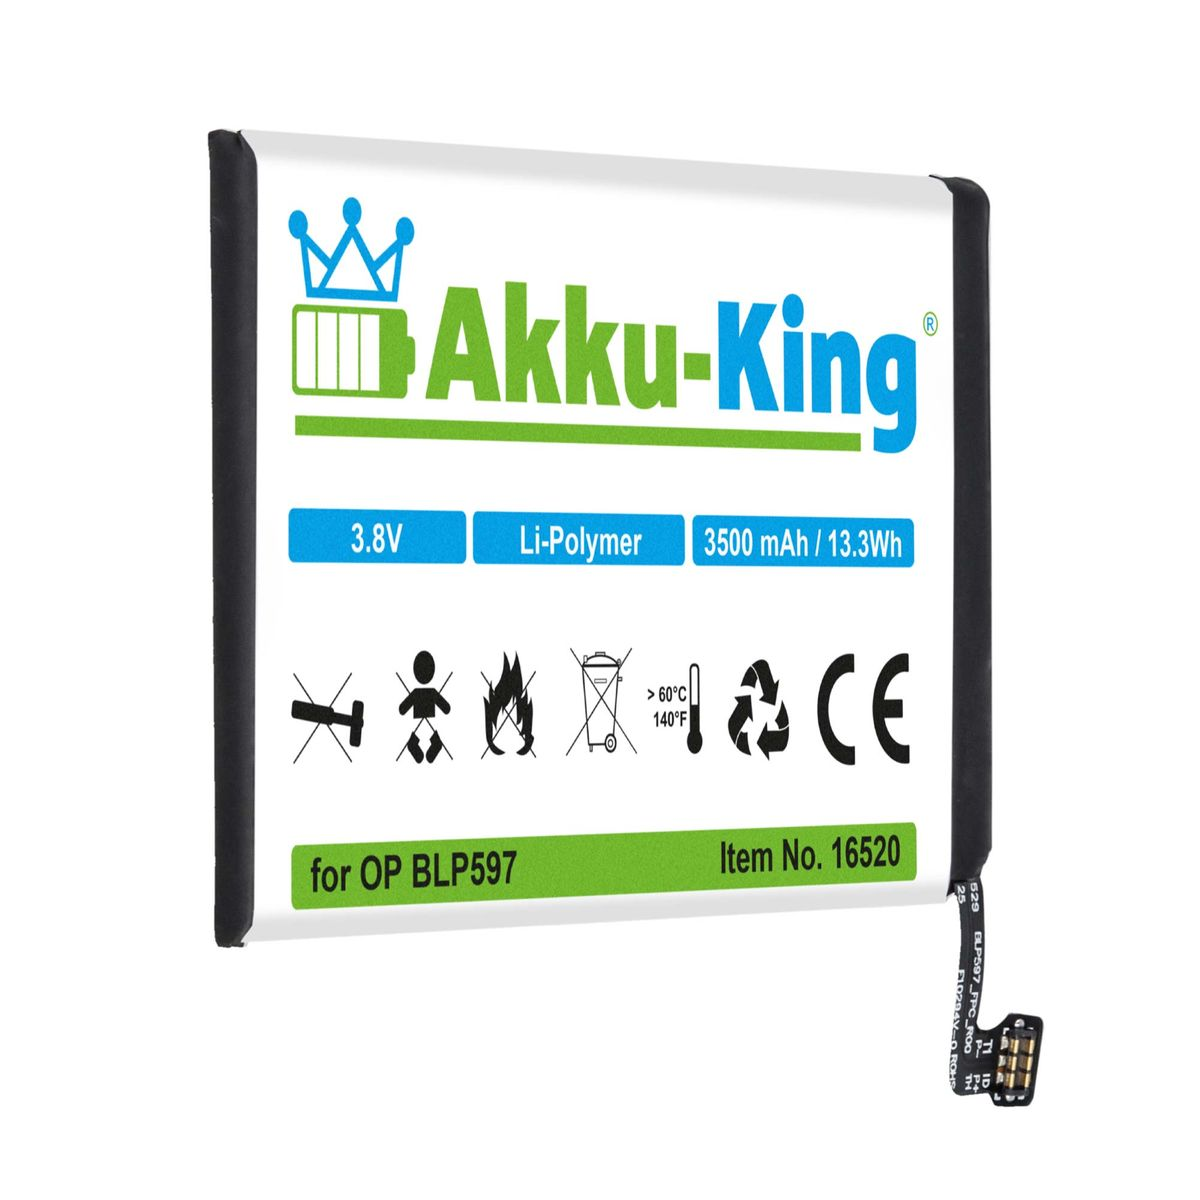 Volt, BLP597 Li-Polymer 3500mAh Akku kompatibel OnePlus mit 3.8 AKKU-KING Handy-Akku,